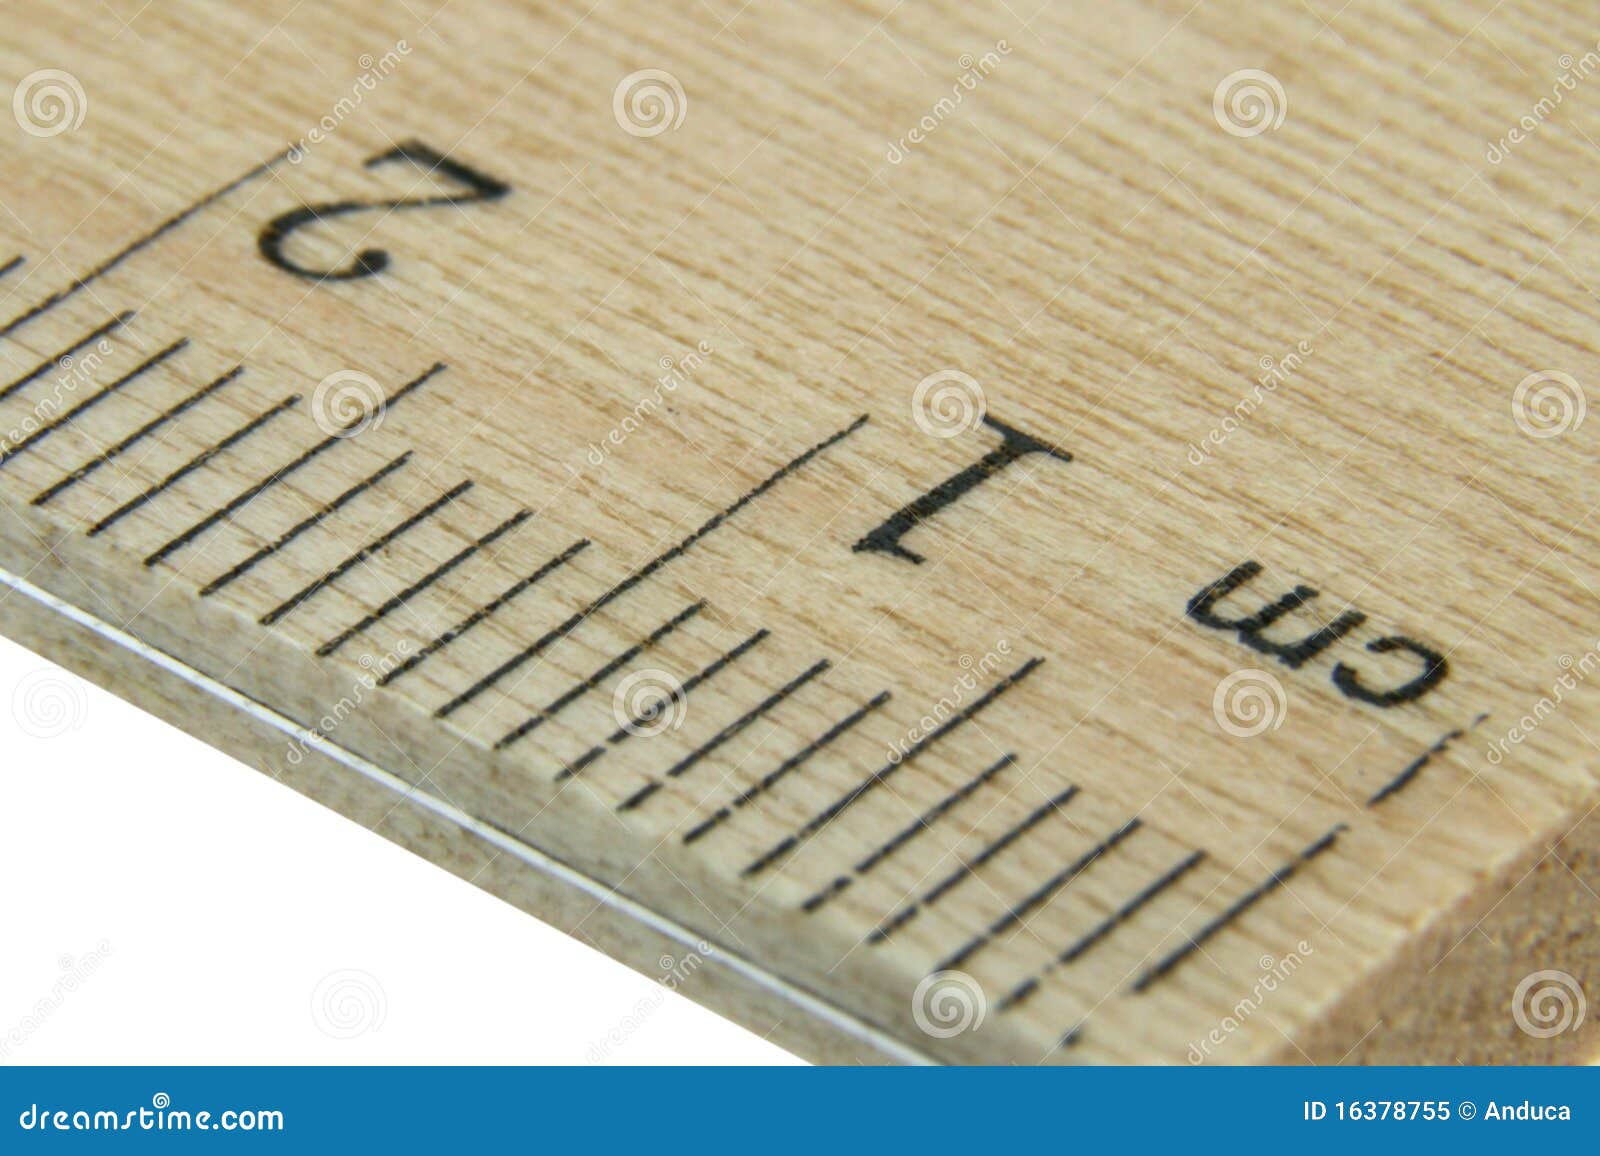 close up wood ruler